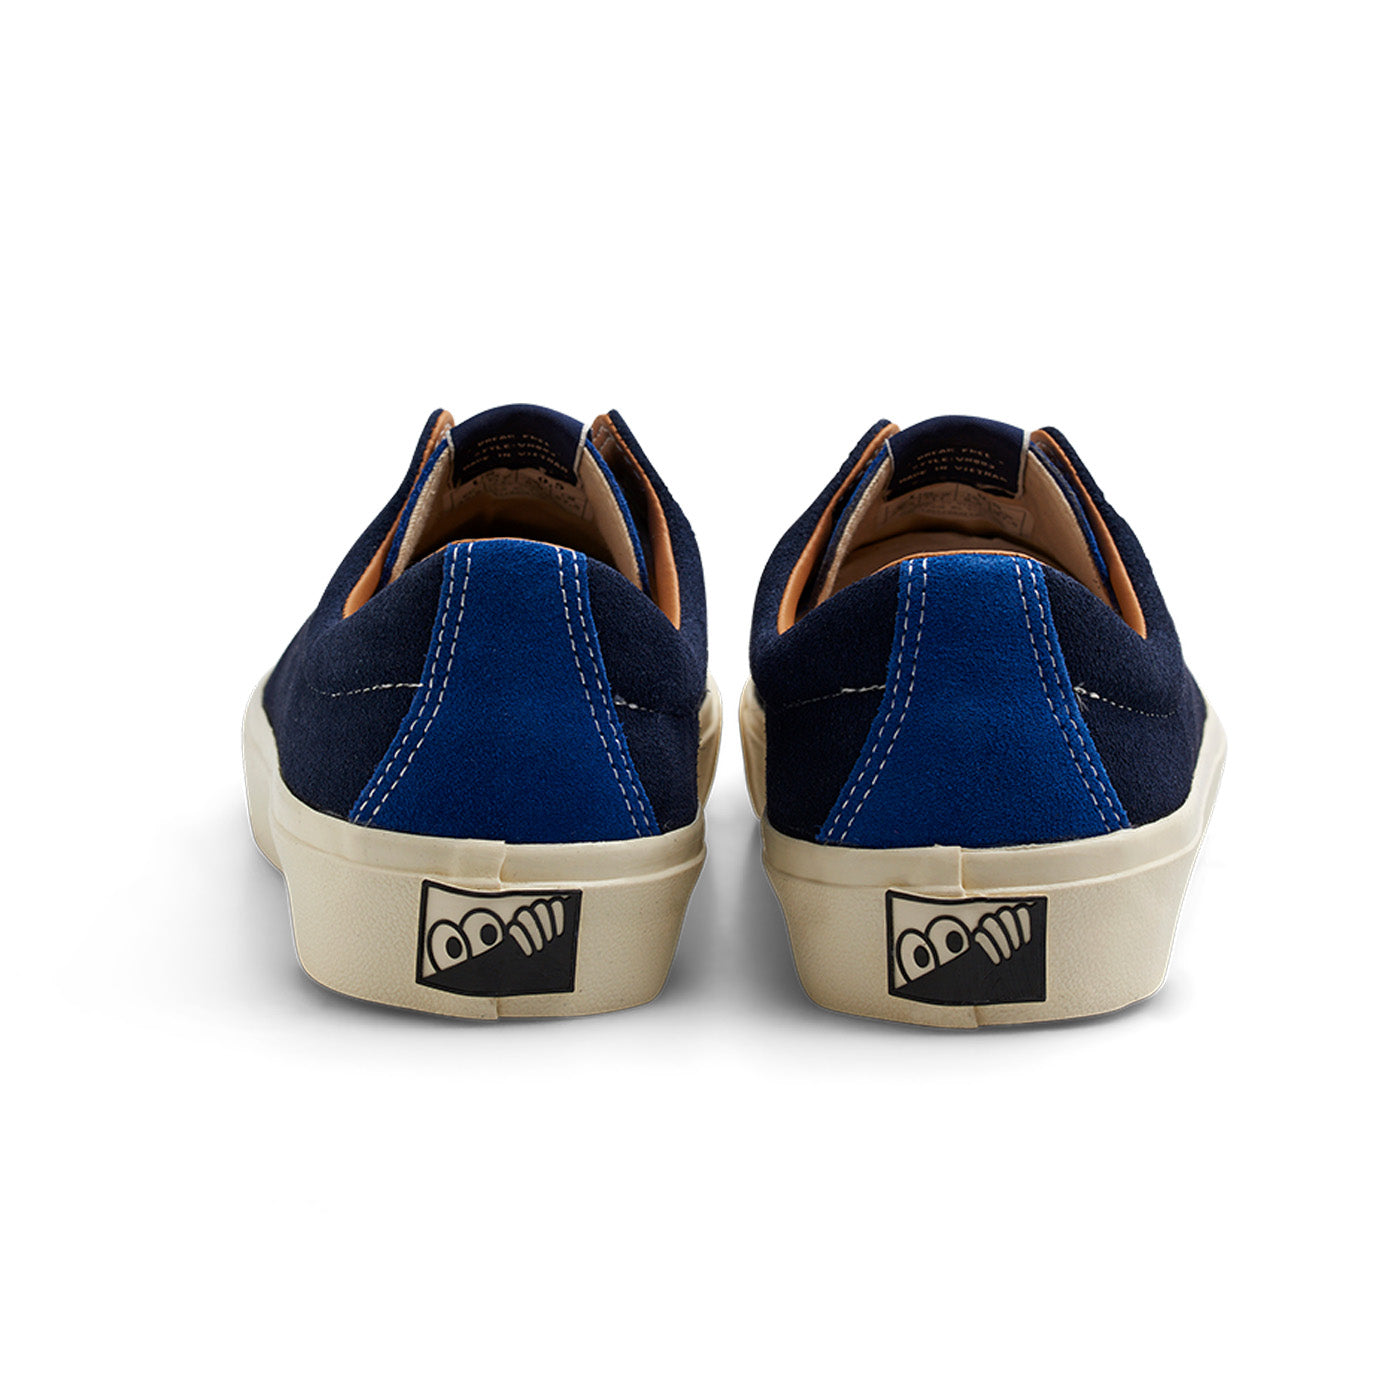 VM003 Shoe Suede, Duo Blue / White